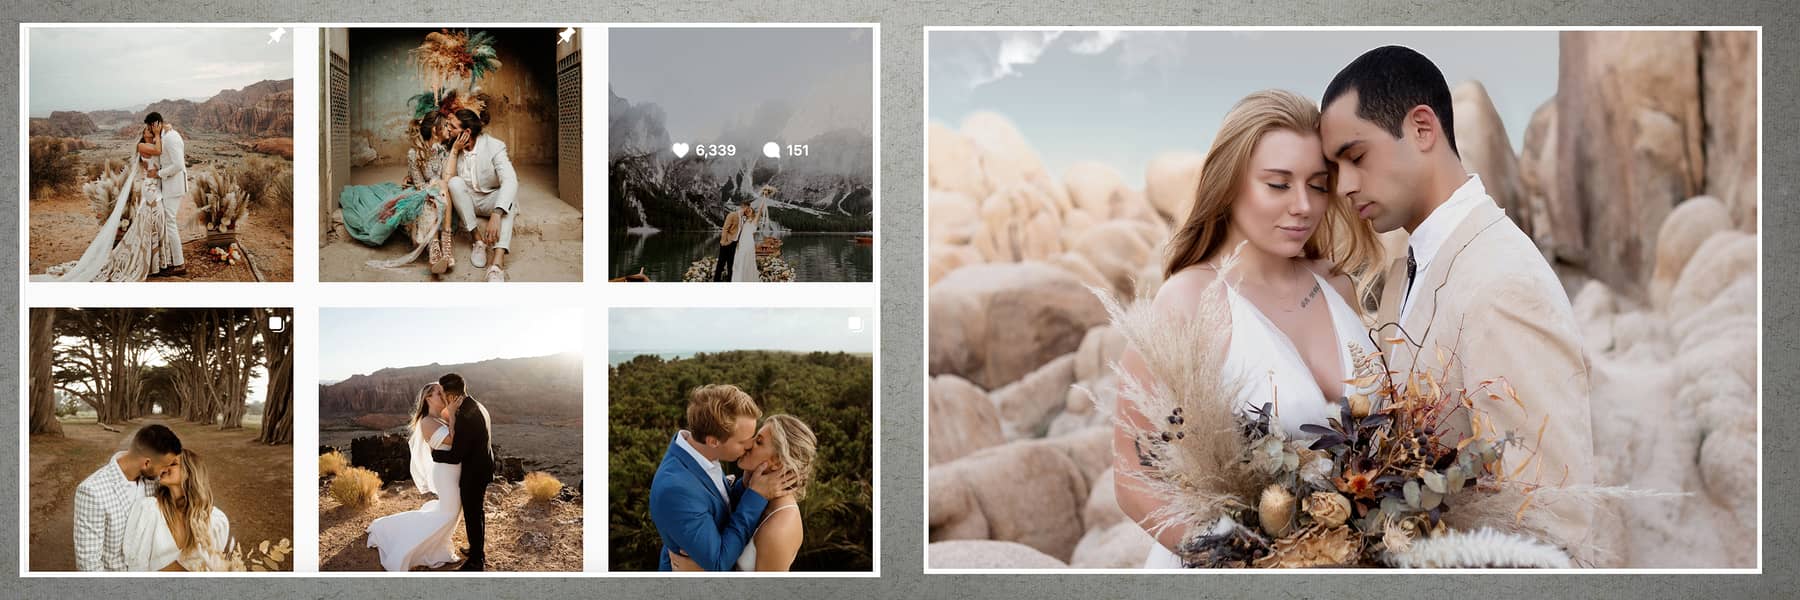 Digital Photo Album. Wedding Photographer available. 3